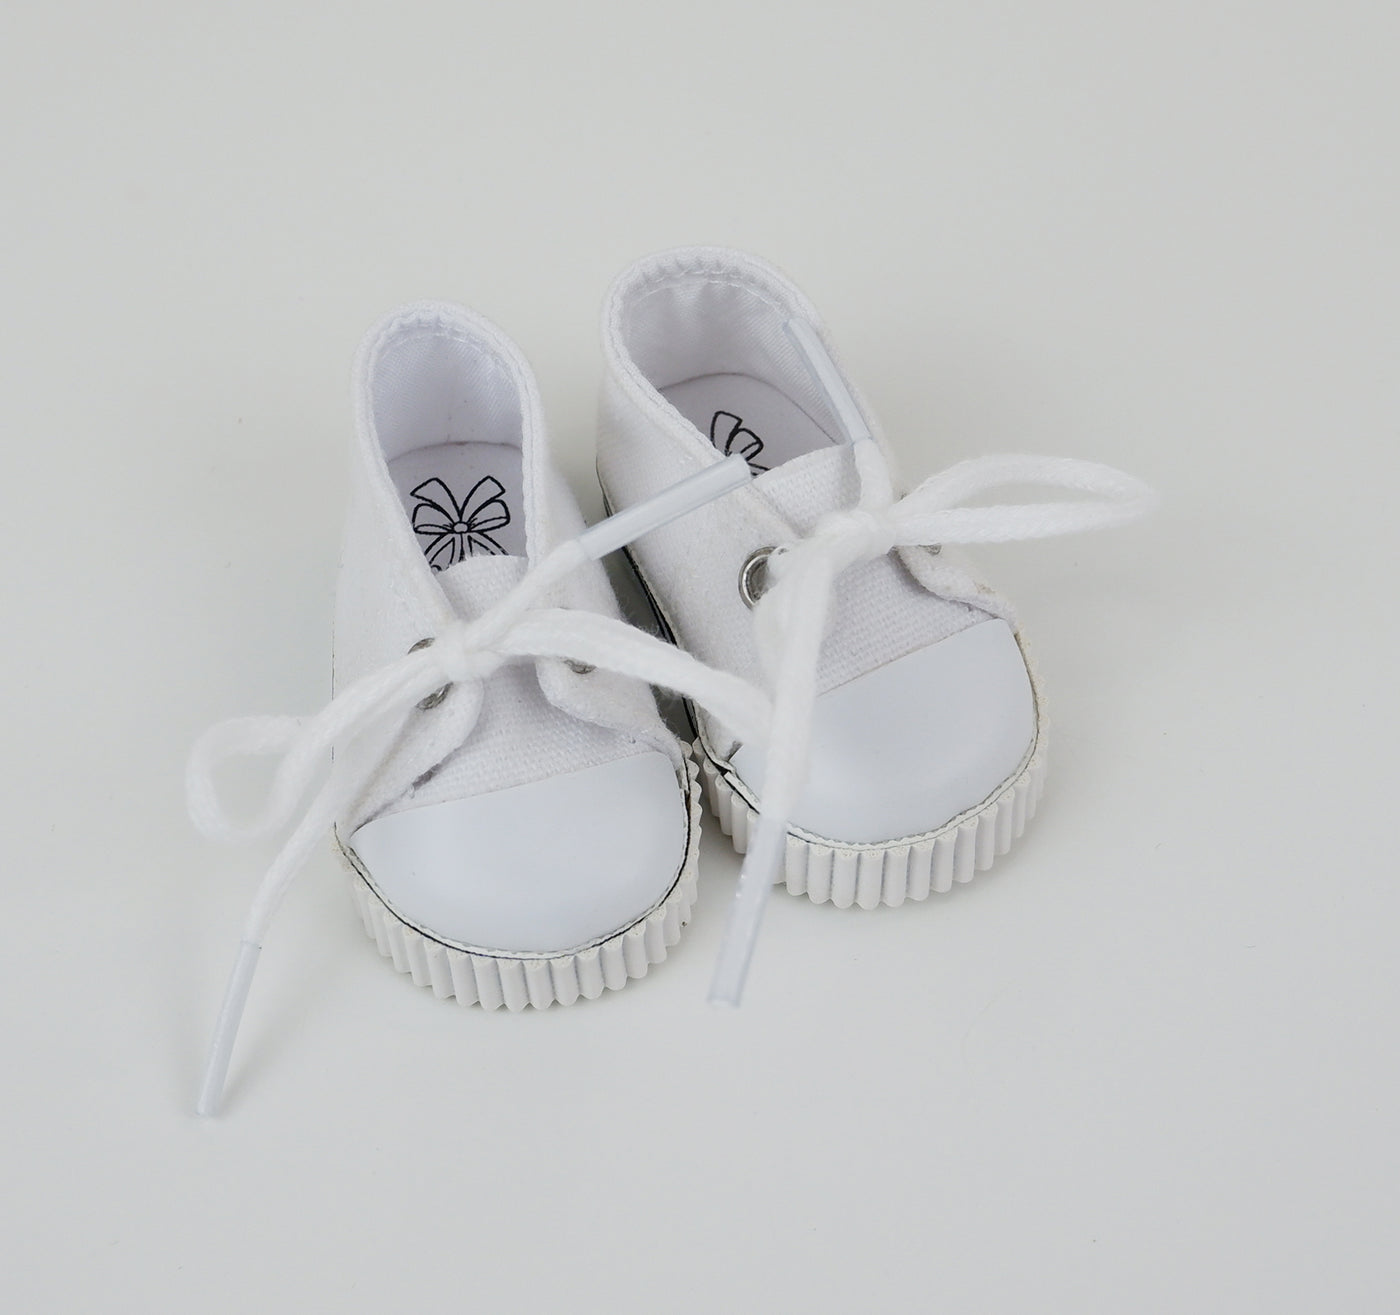 Tennis Shoes - White